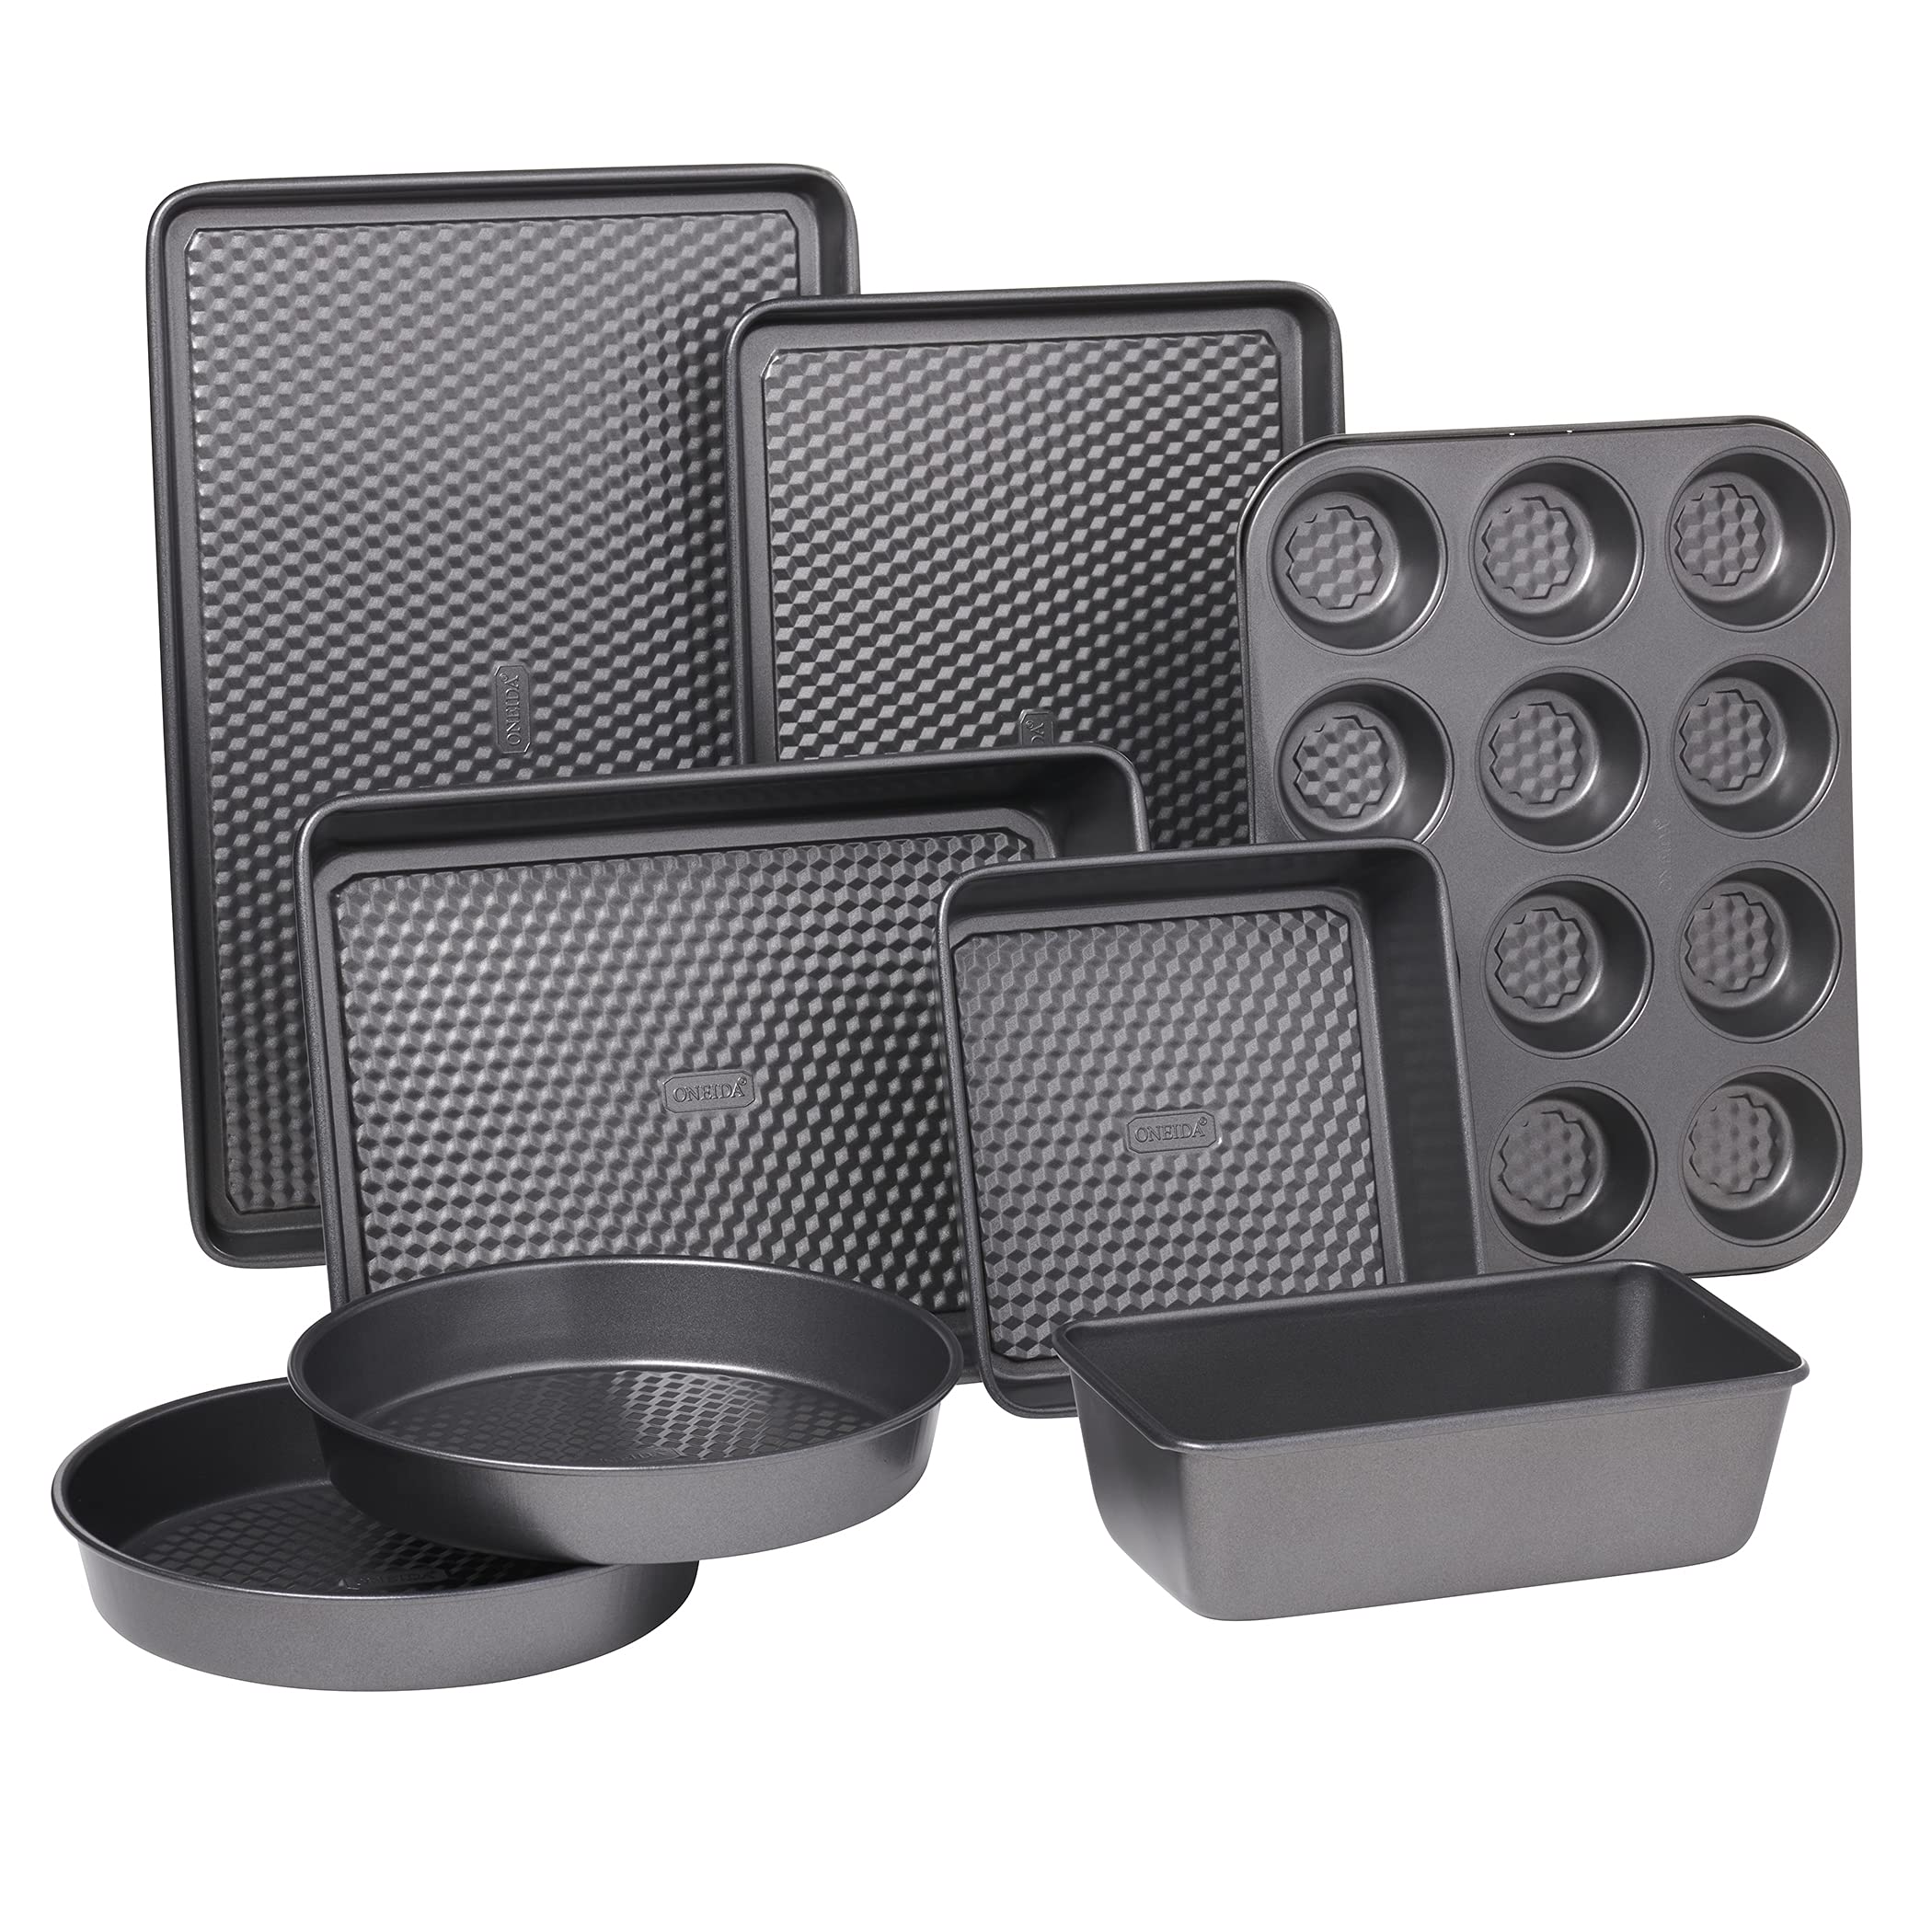 Oneida TEXPRO 8 Piece Nonstick Metal Bakeware Set, High-Performance & Dishwasher Safe